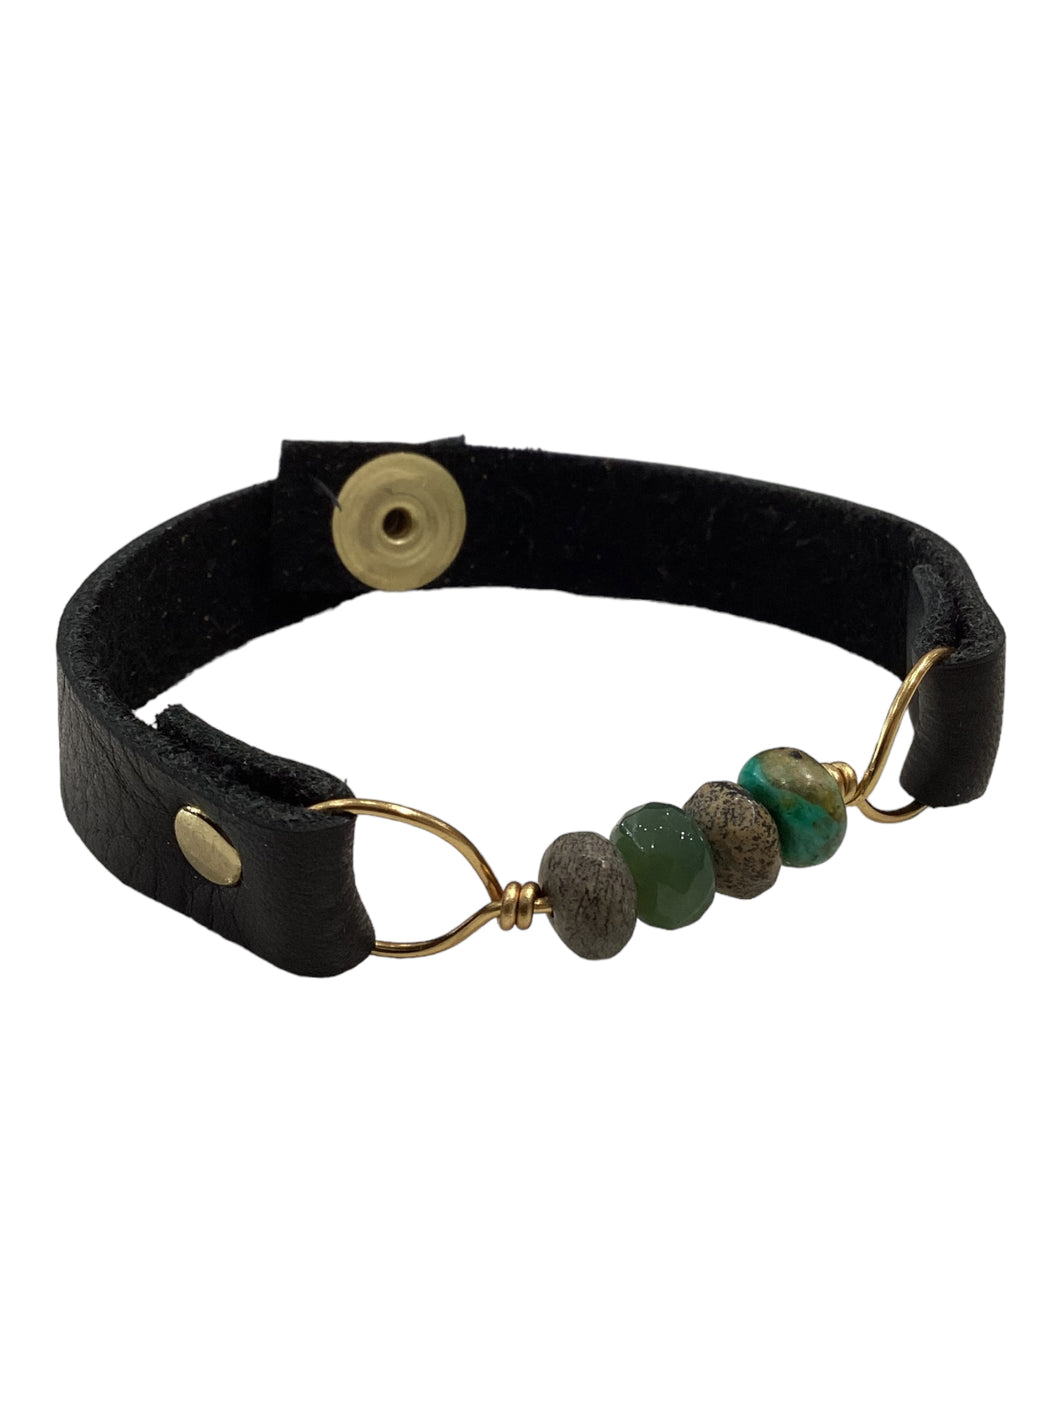 Slim Leather Bracelet with Stones - Assorted Jasper